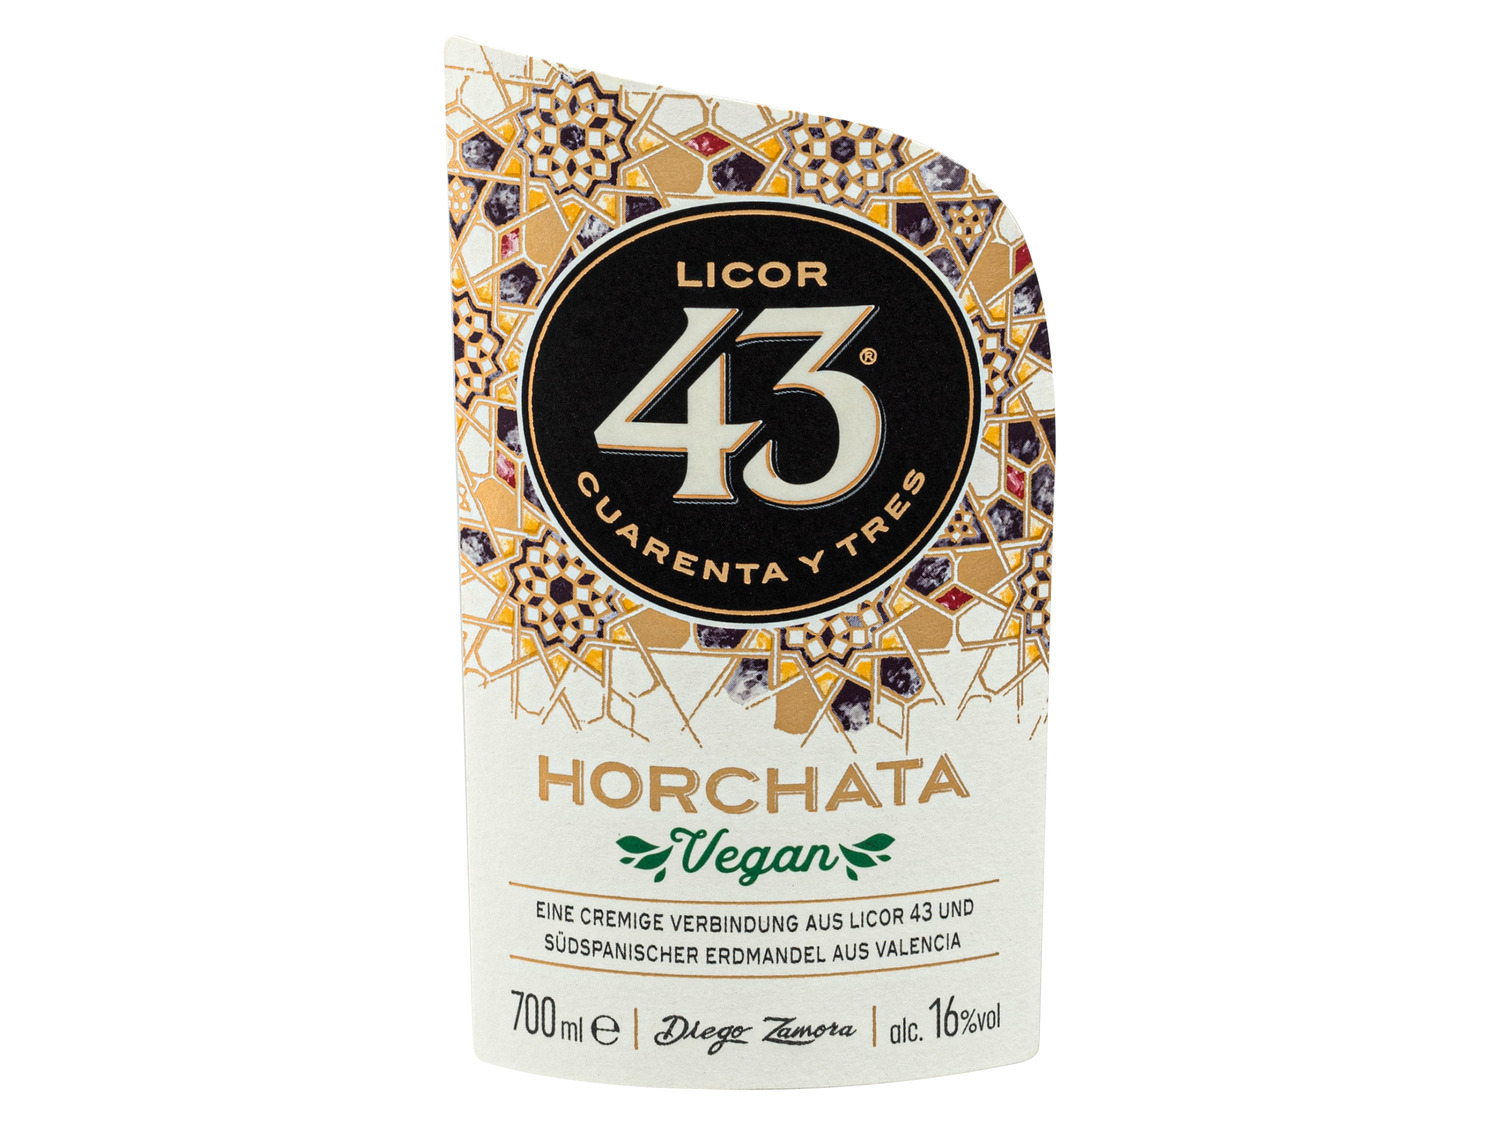 Licor 43 Horchata vegan 16% Vol kaufen online LIDL 